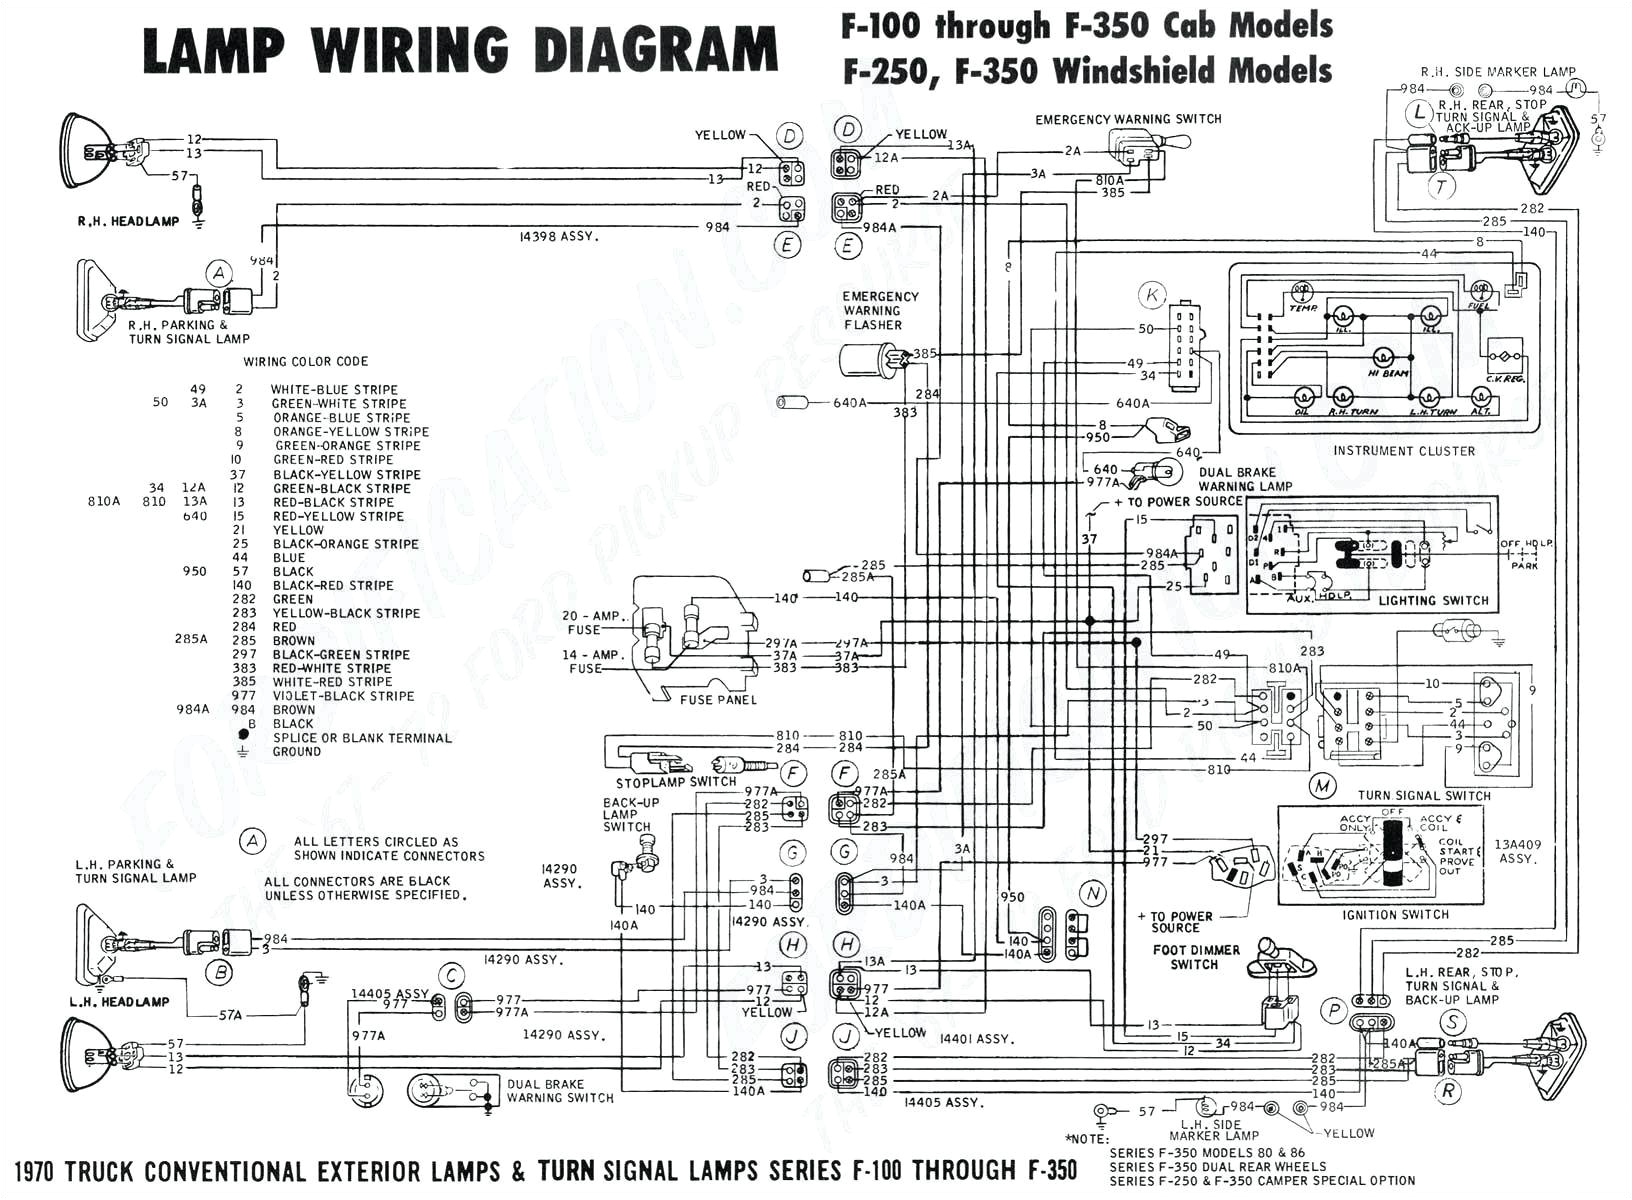 2006 f550 fuse panel diagram wiring diagram used 2006 kenworth fuse panel diagram